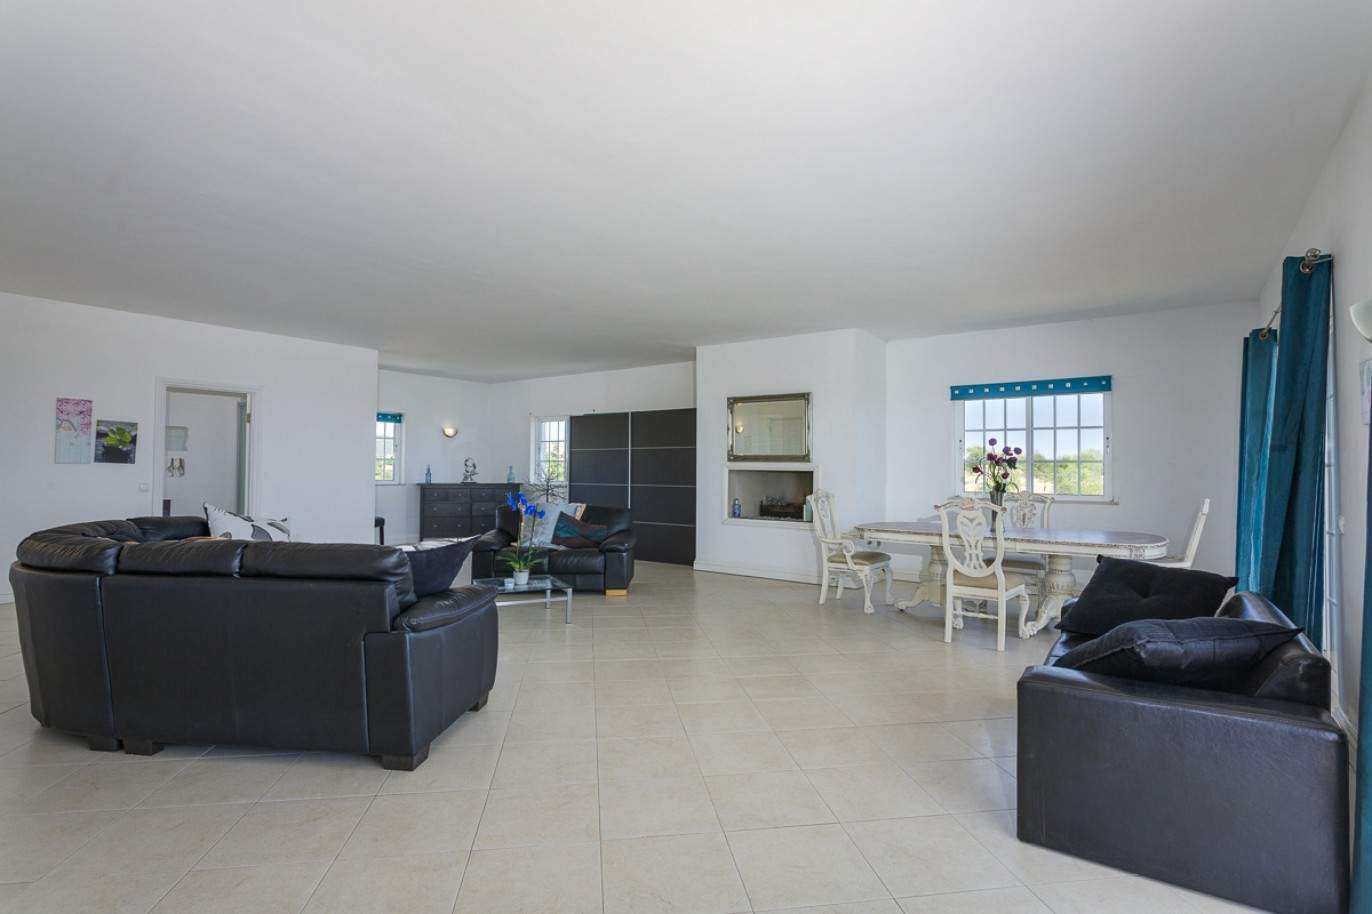 4 Bedroom Villa with sea view, for sale in Boliqueime, Algarve_209955